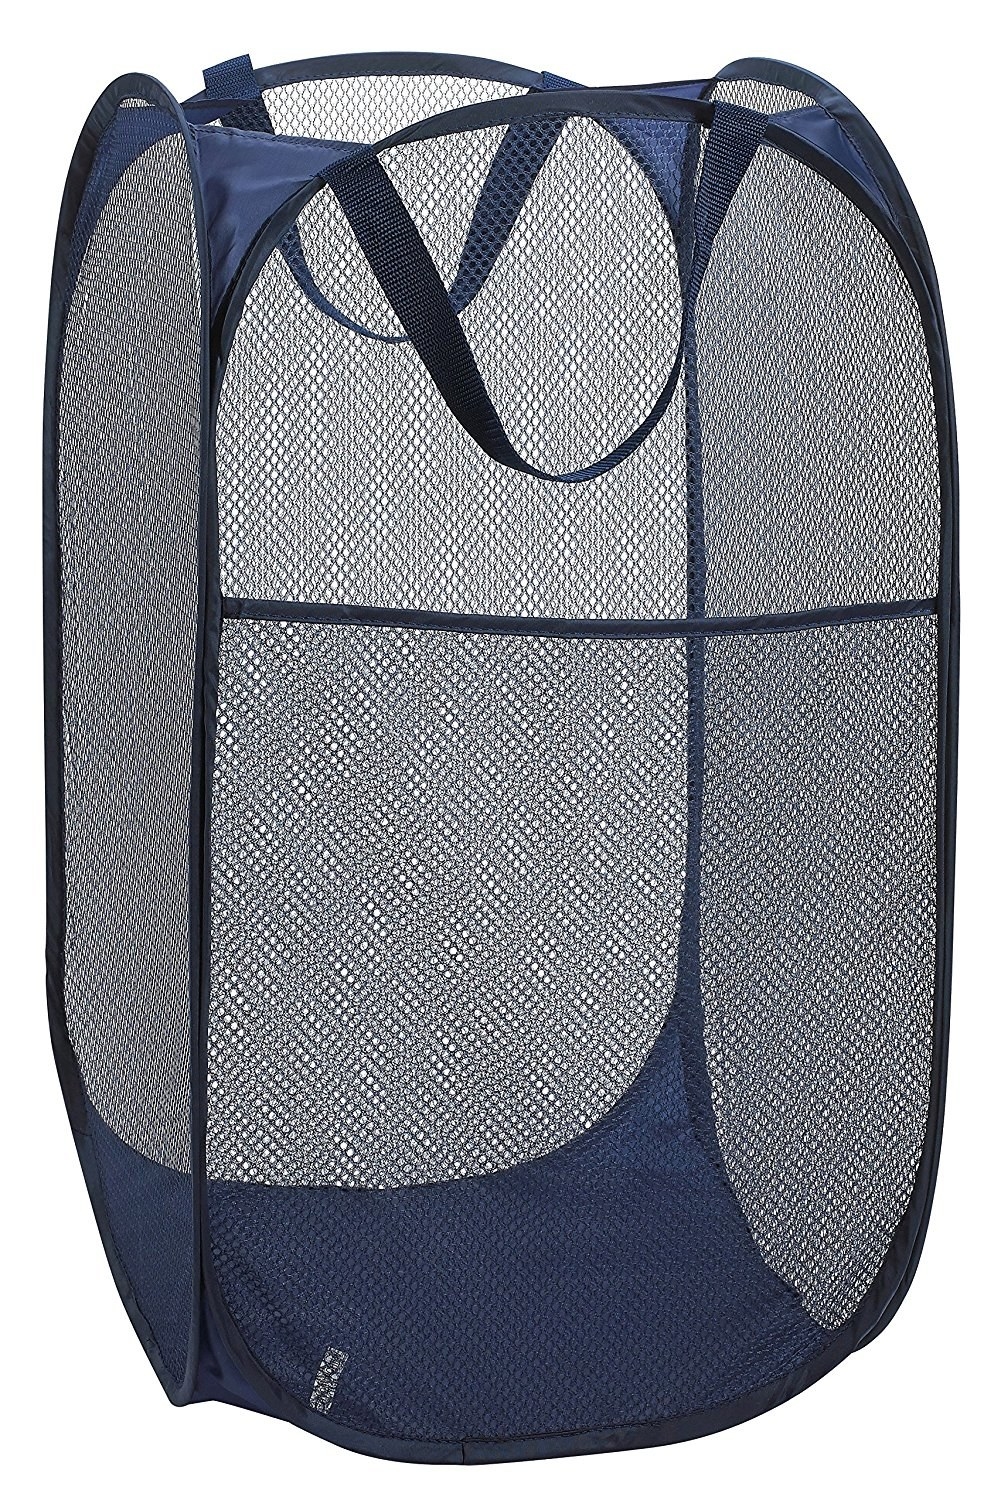 6 X Drawstring Mesh Laundry Bag Storage Wash Clothes Hamper Heavy Duty 18" X 12" 